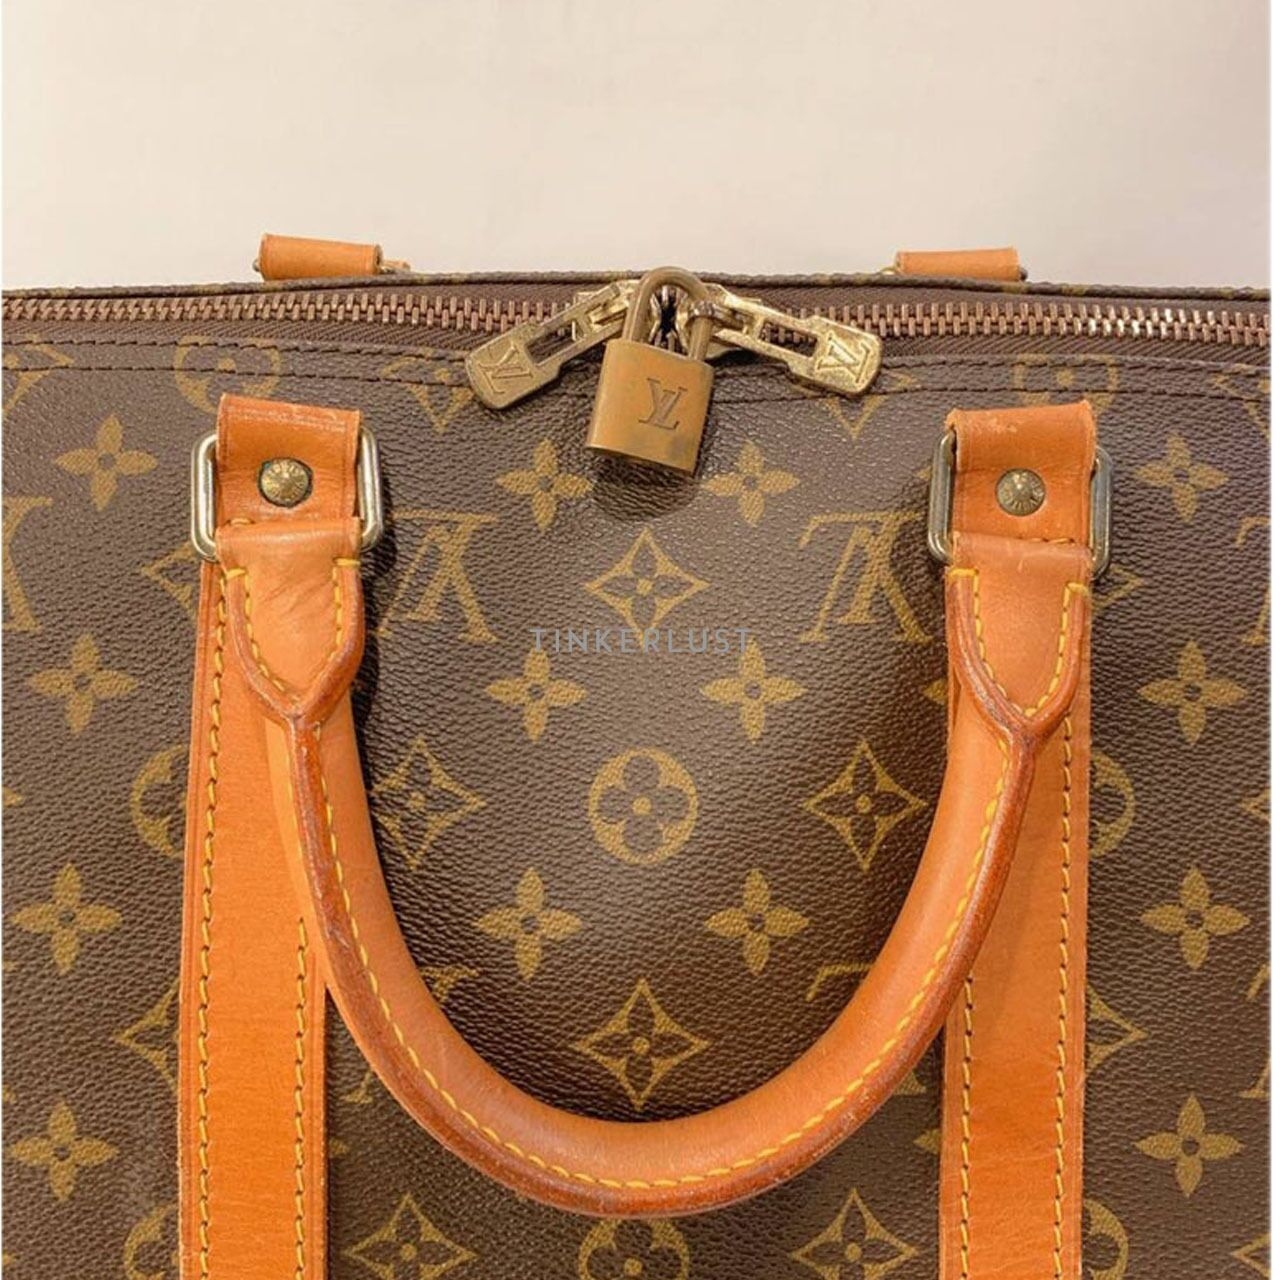 Louis Vuitton Keepall 50 Vintage Monogram GHW Travel Bag